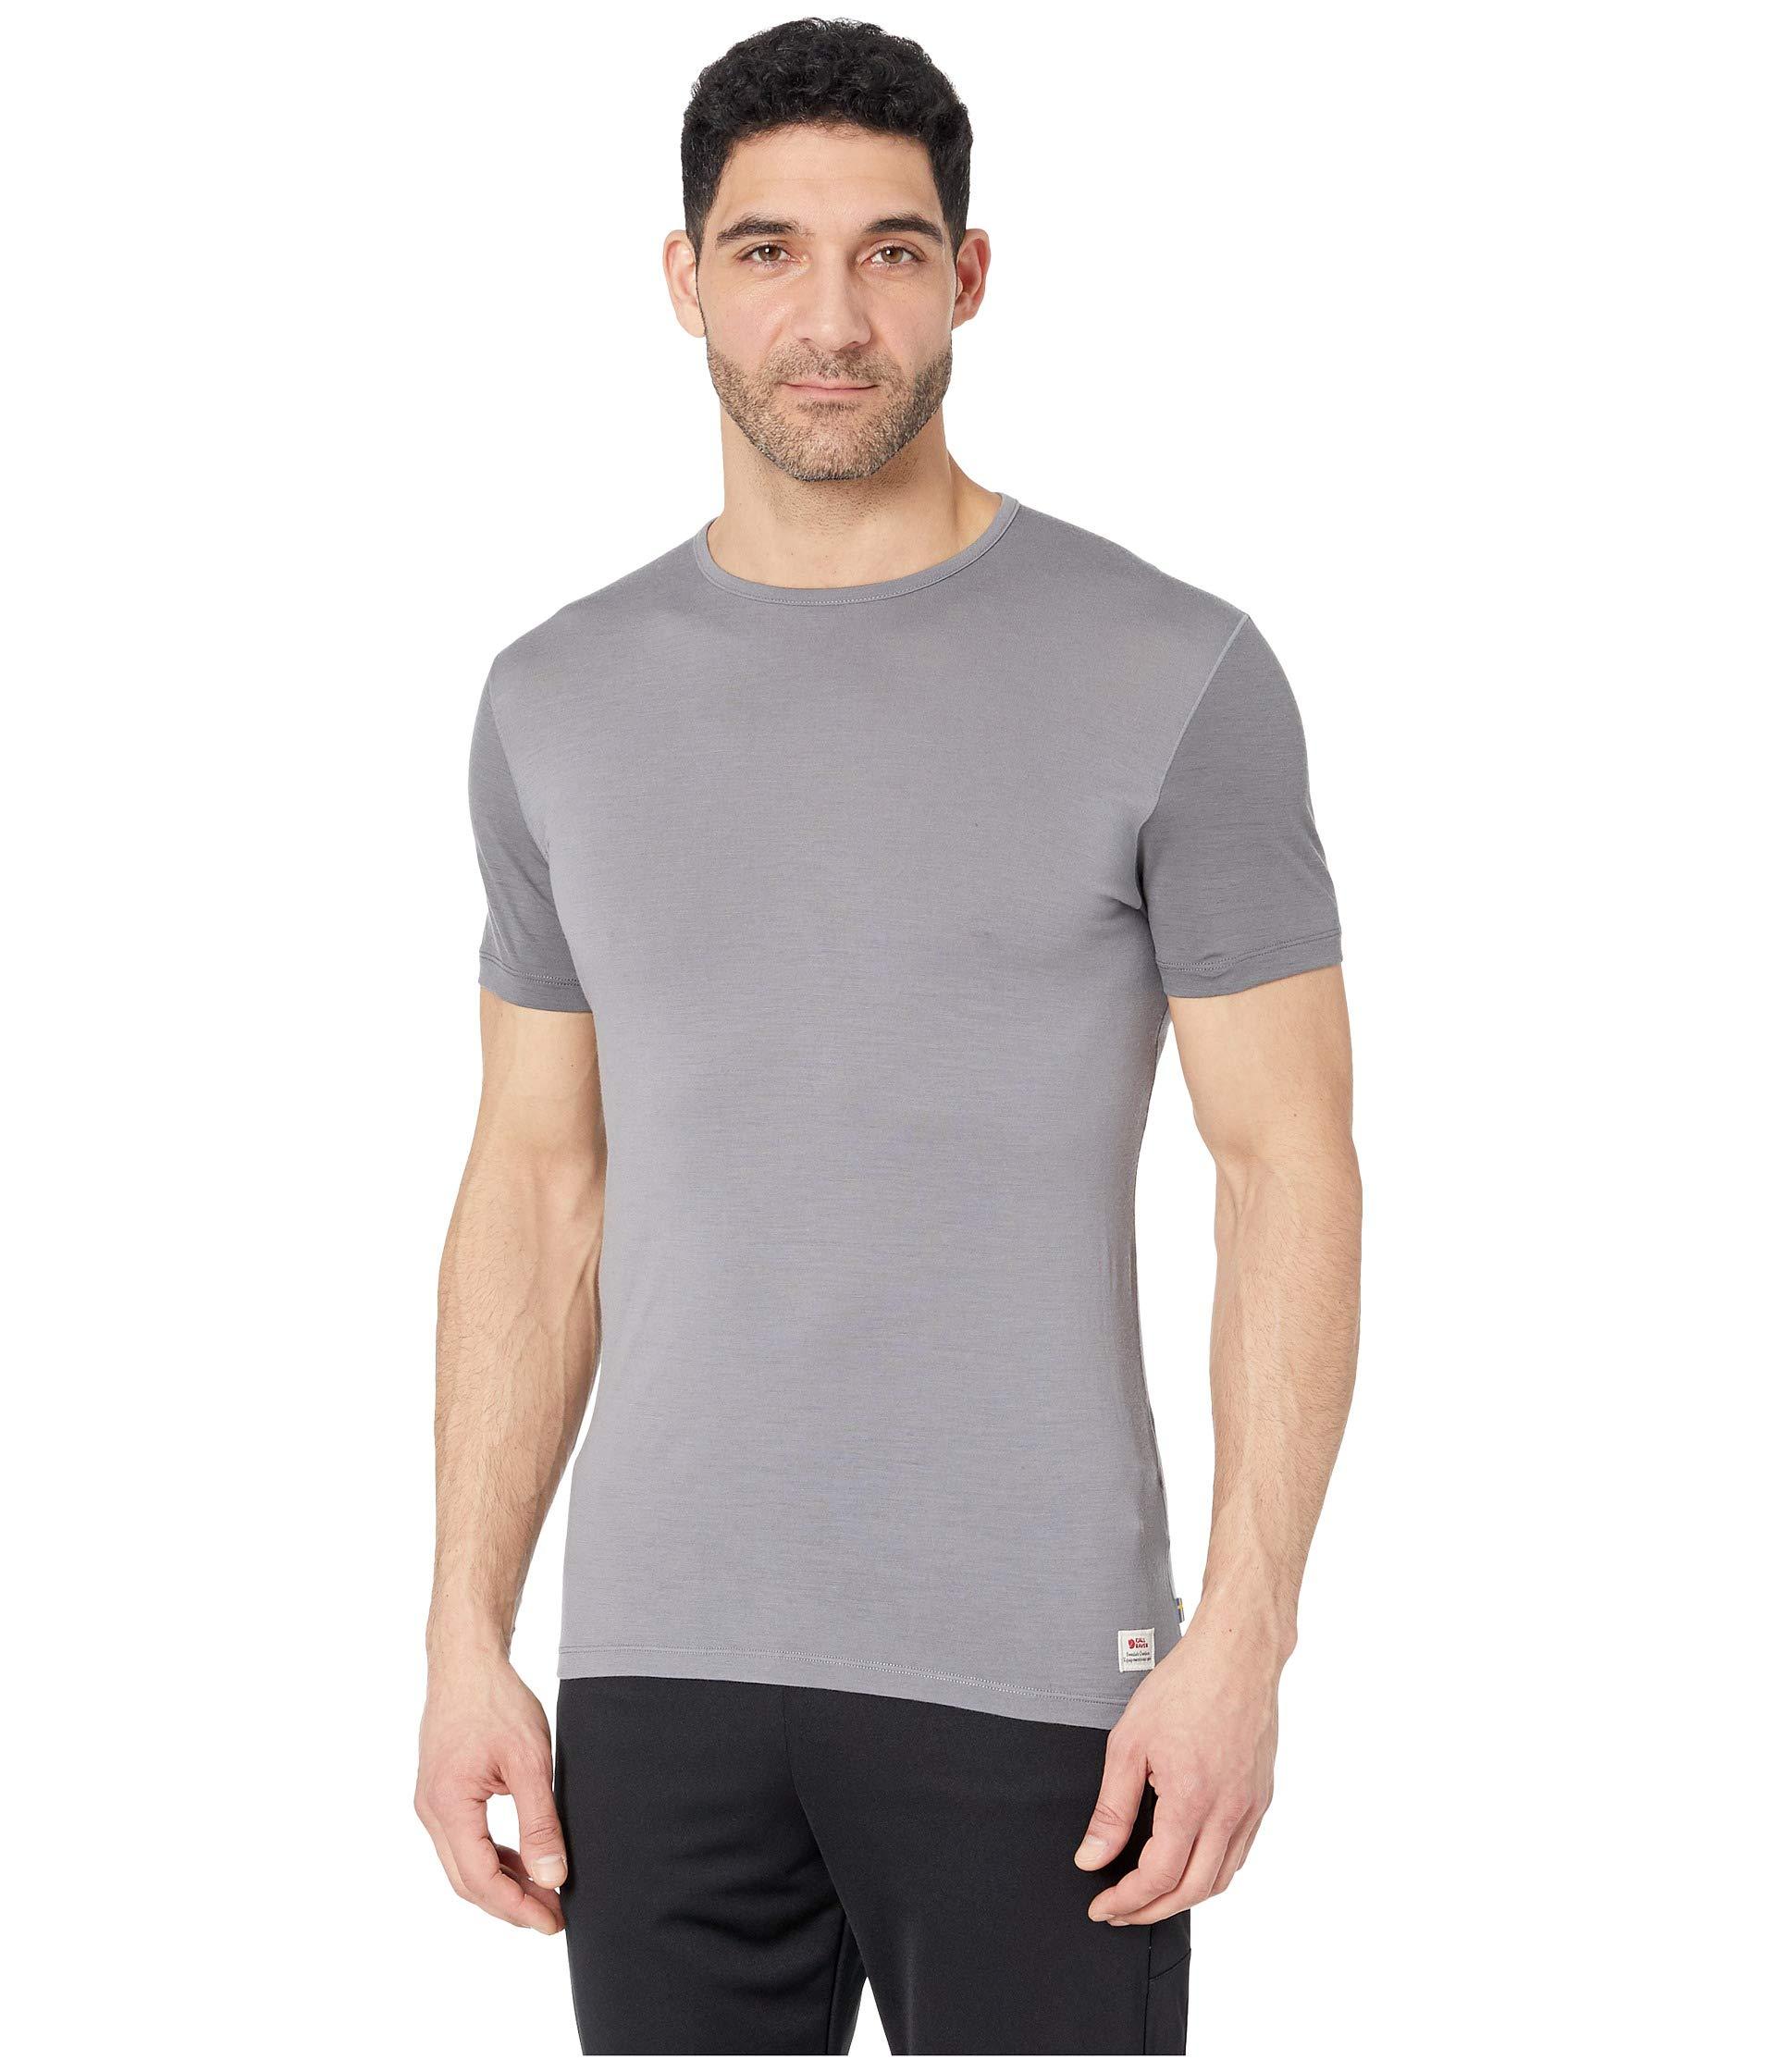 Fjallraven Keb Wool T-shirt in Light Grey/Grey (Gray) for Men - Save 1% ...